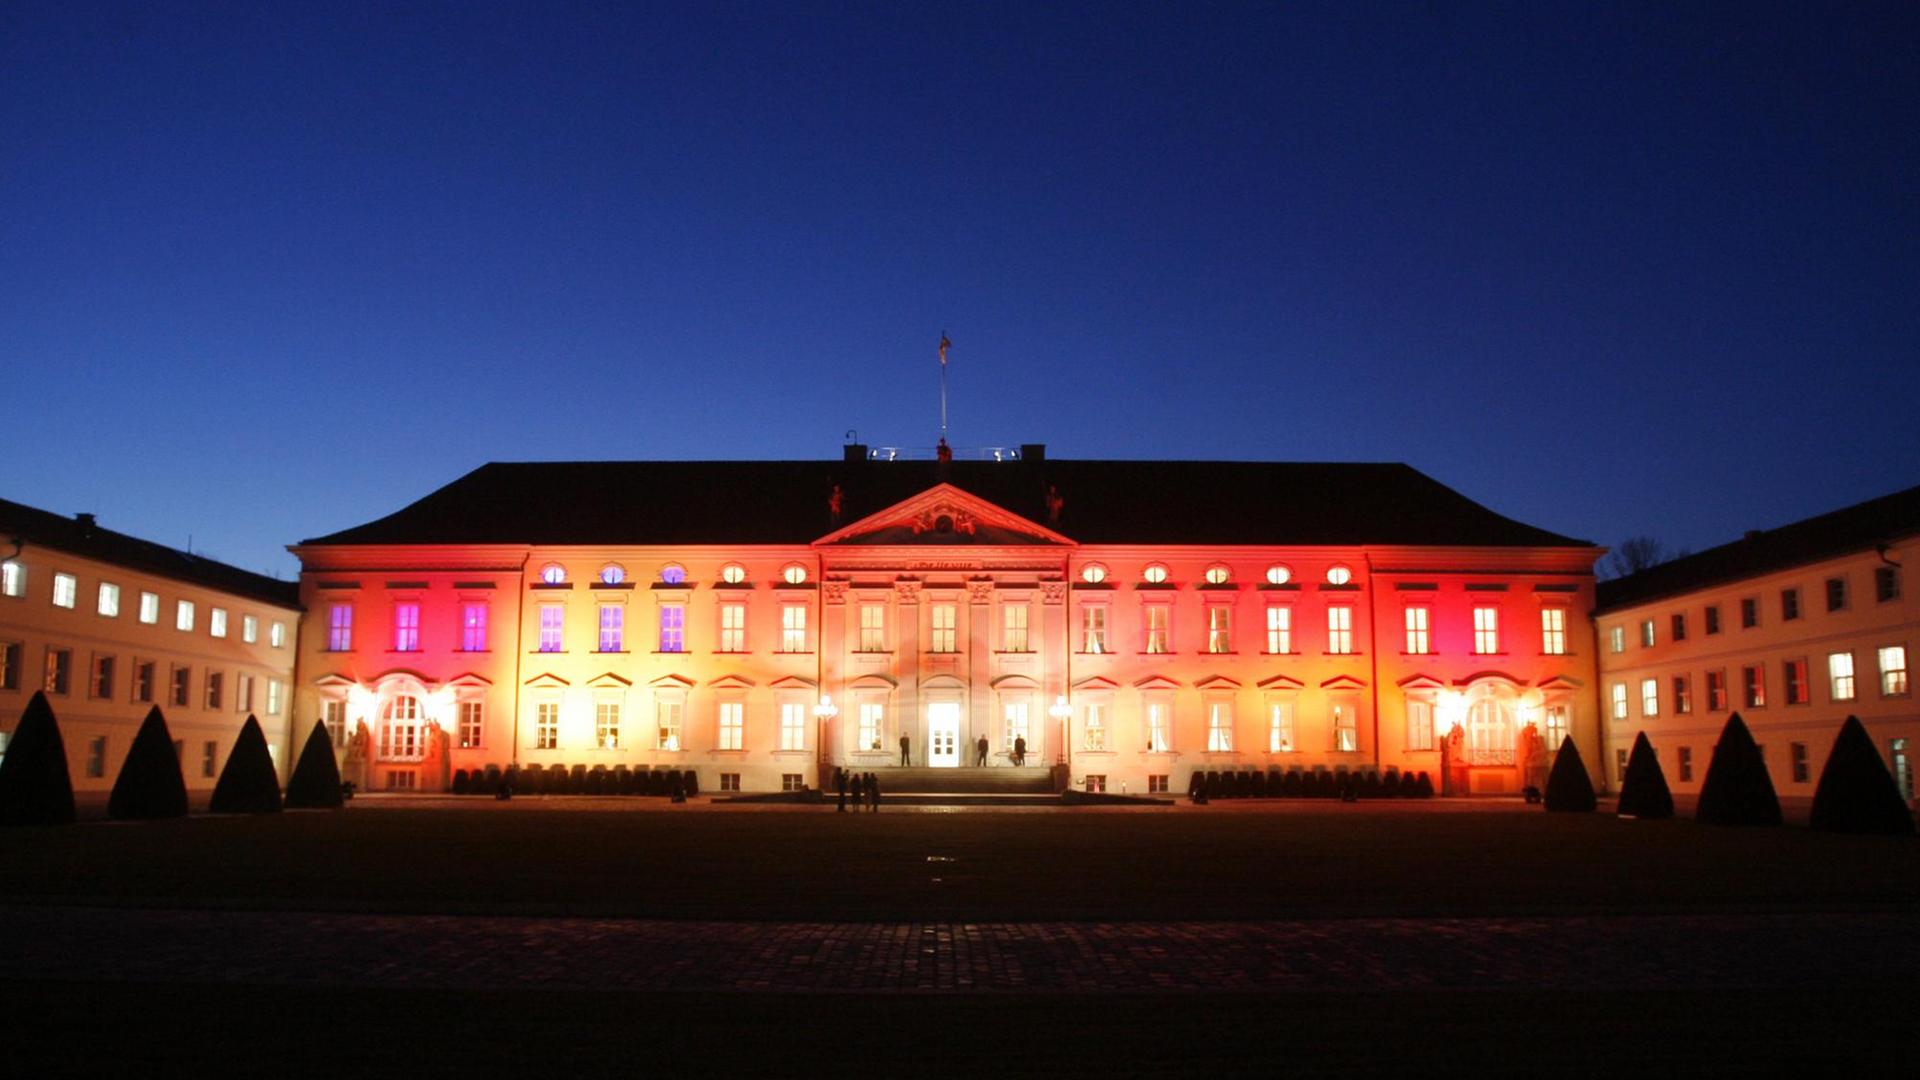 In bunten Farben erstrahlt am Mittwoch (22.03.2006) das Schloss Bellevue in Berlin w